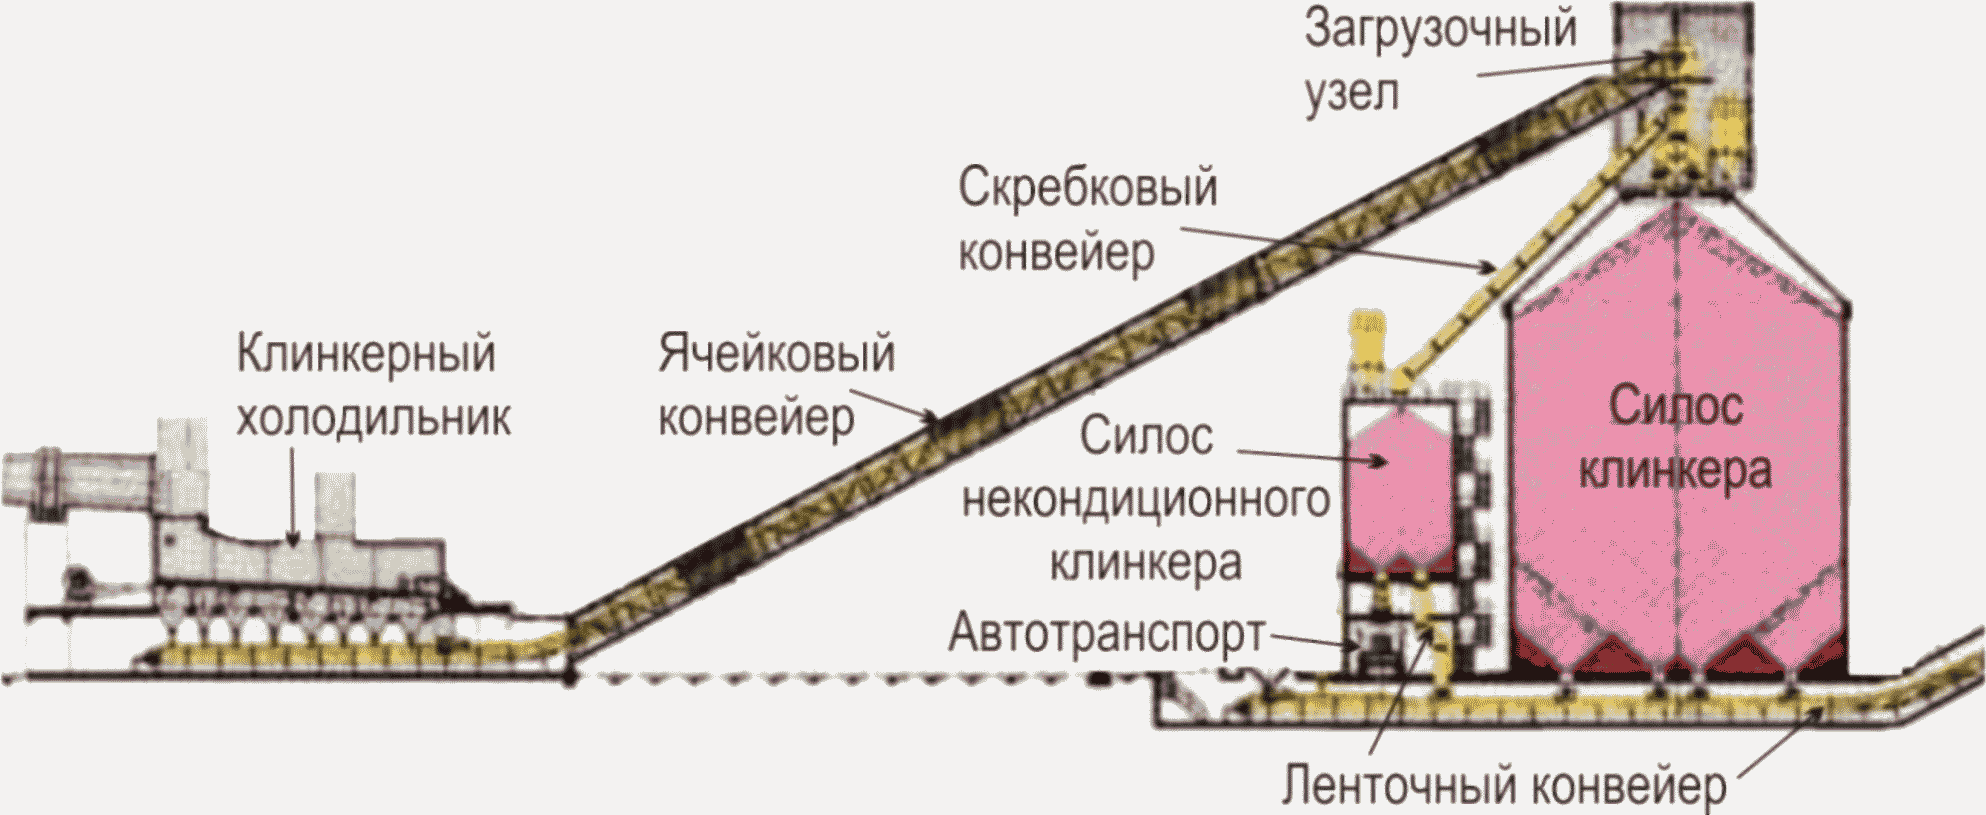 Склад Клинкера цементного завода